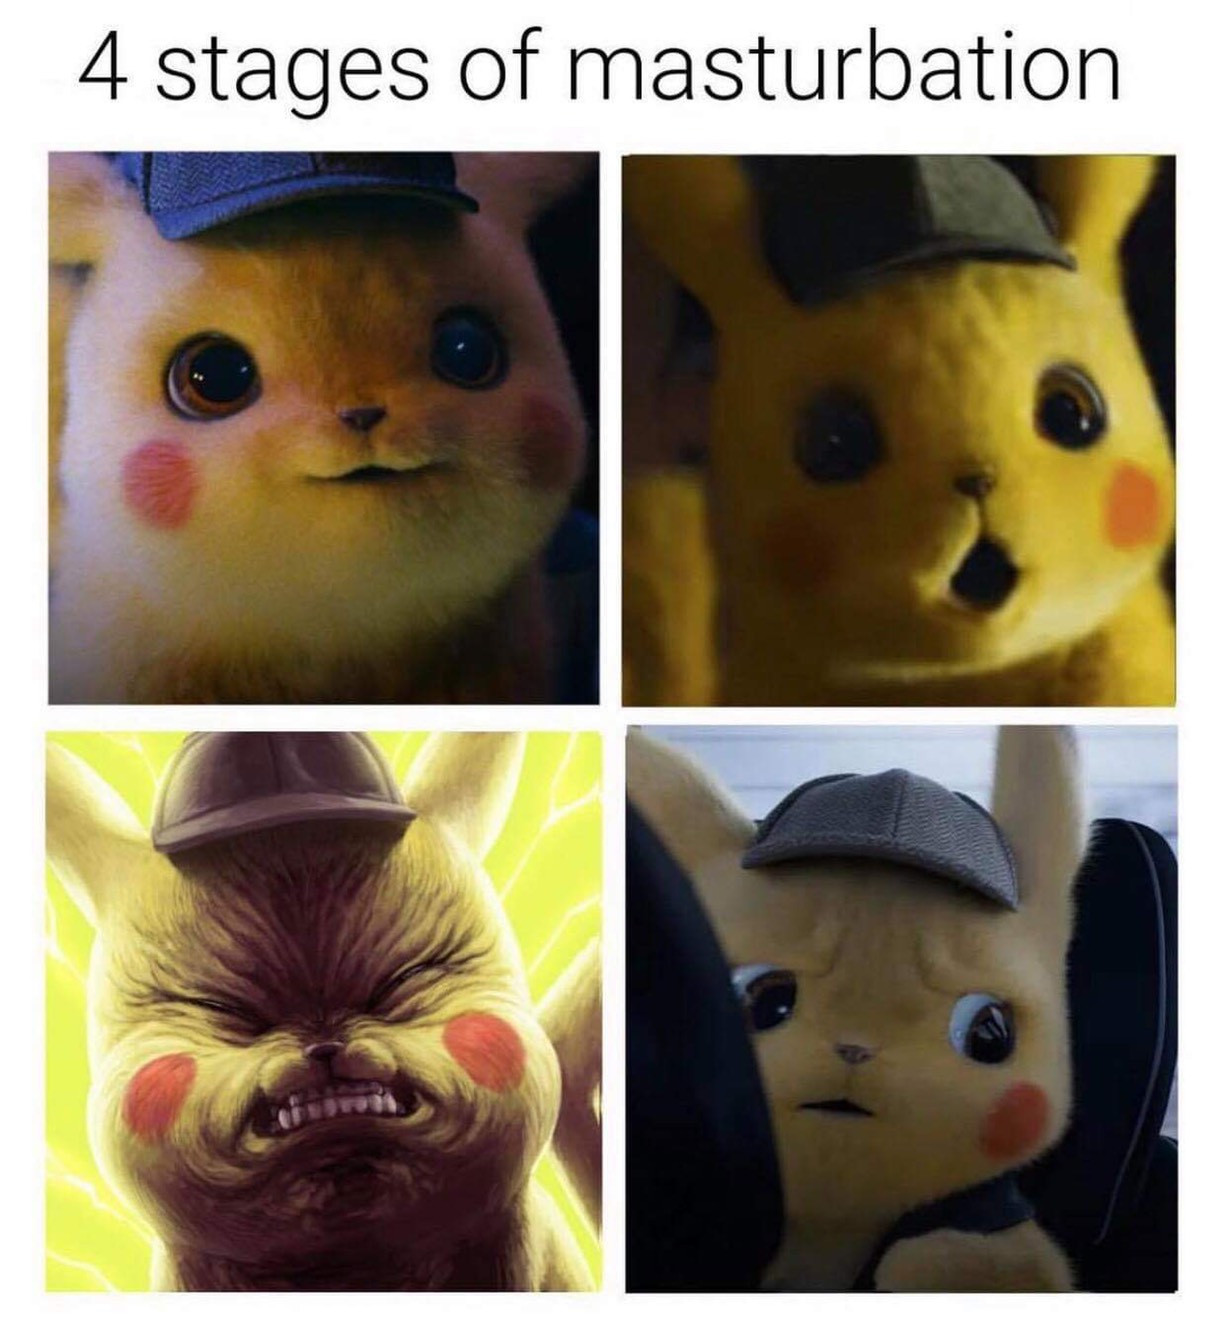 stages of masturbation meme - 4 stages of masturbation